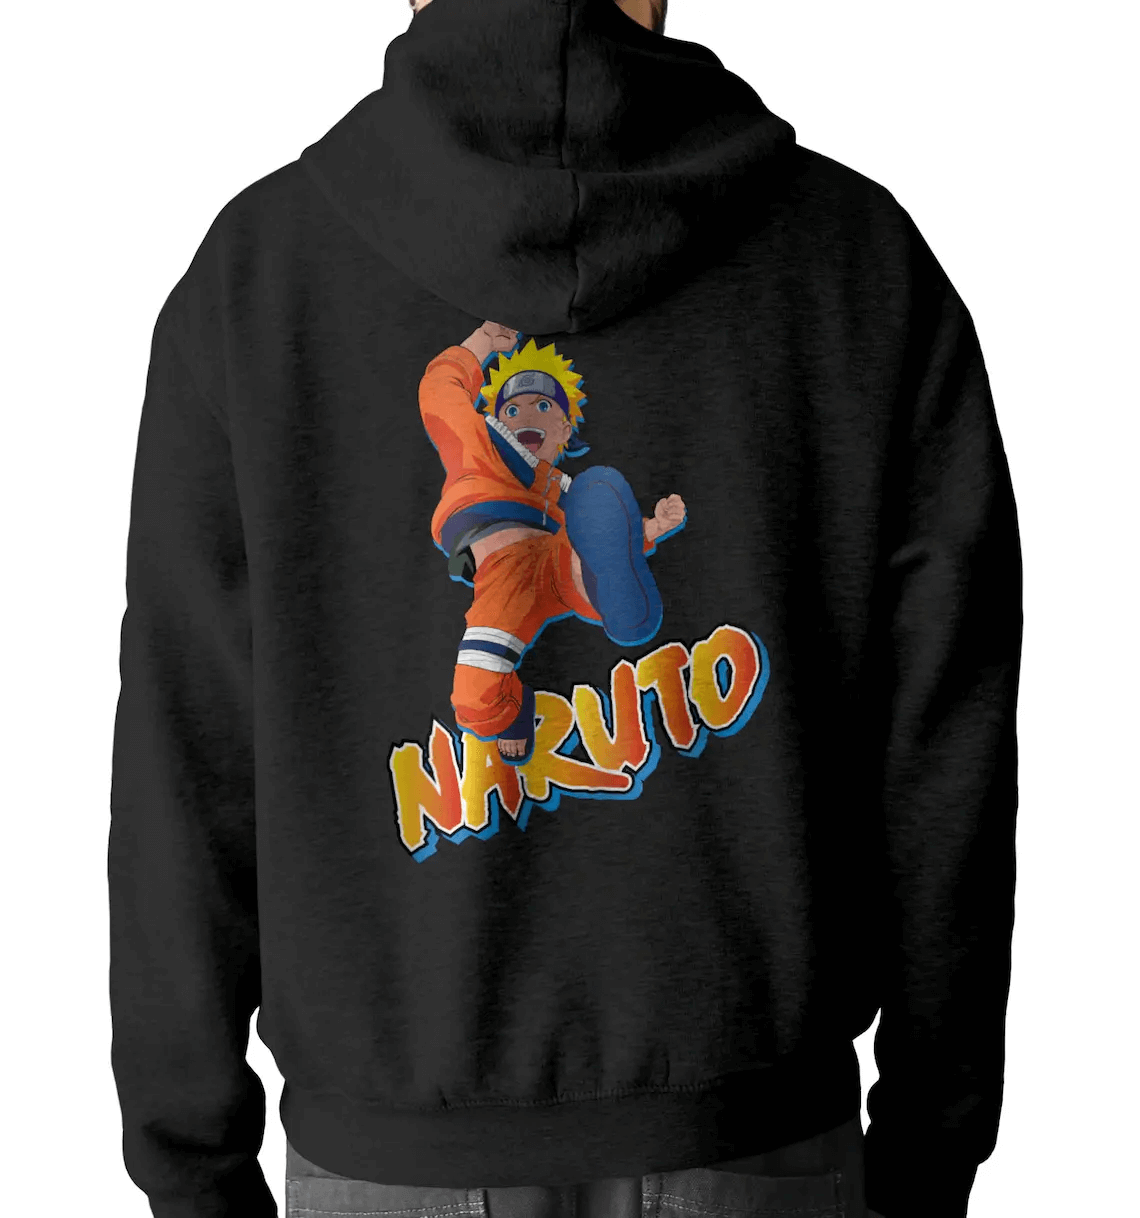 Naruto On a Black Pullover.